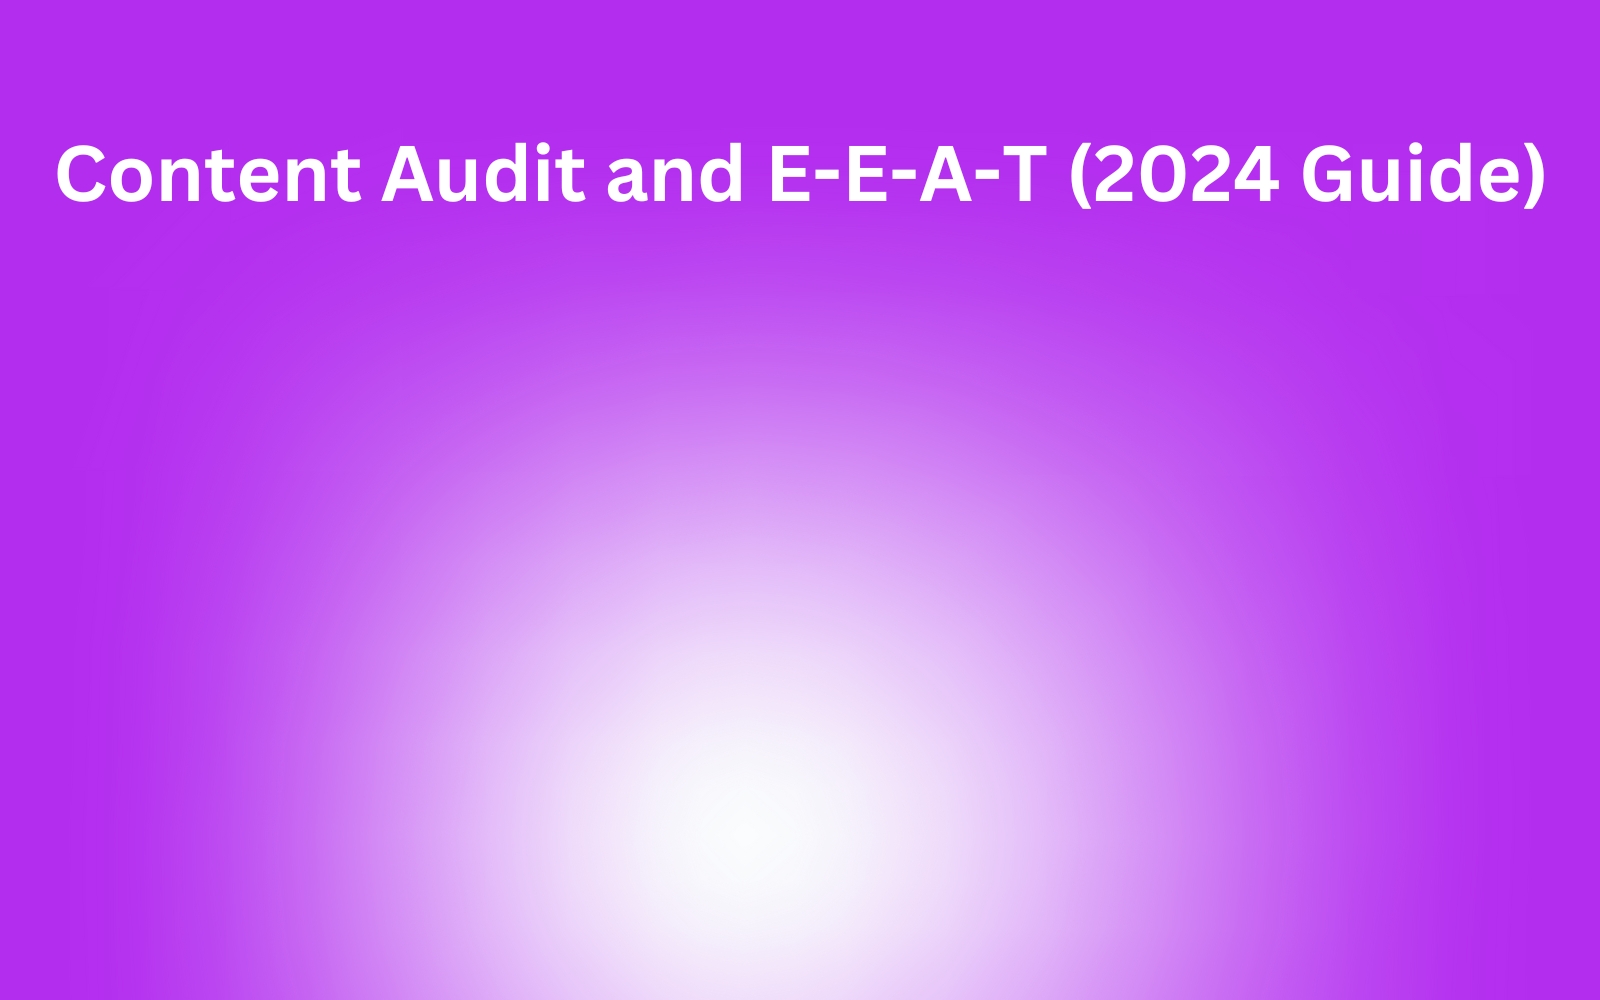 Content Audit and E-E-A-T